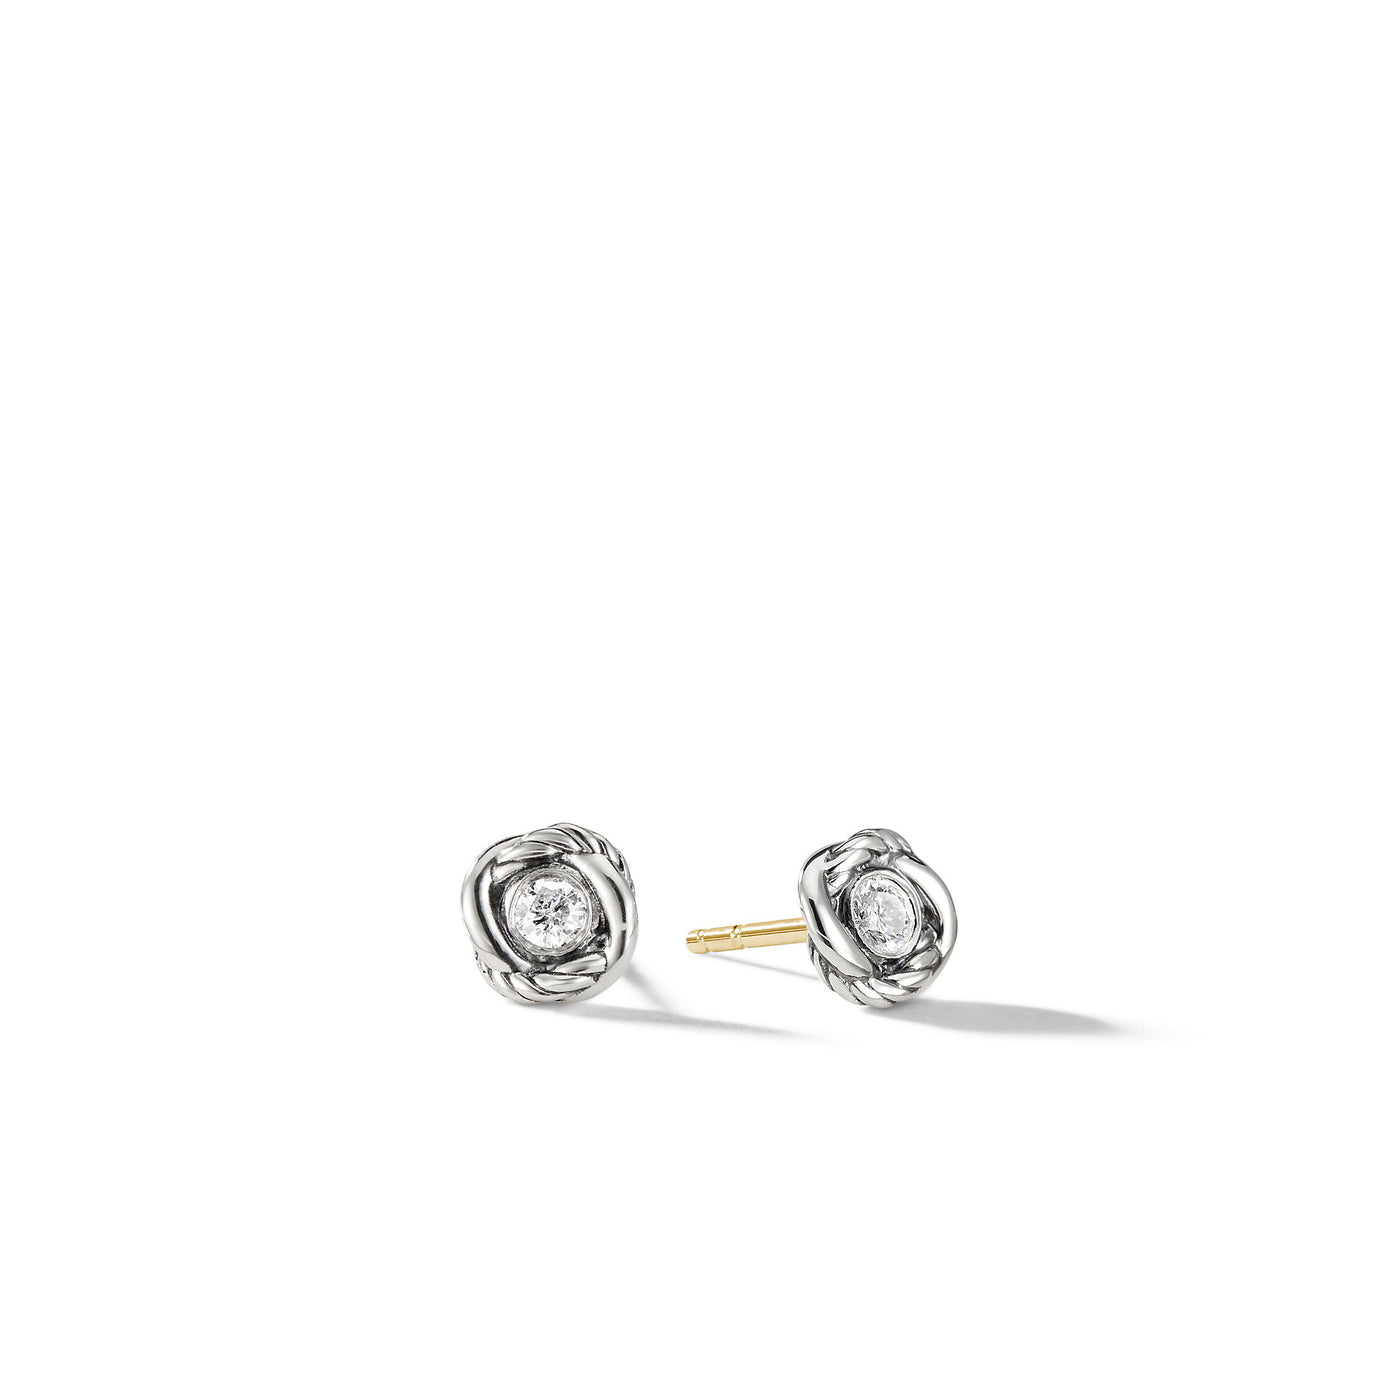 Infinity Stud Earrings in Sterling Silver with Diamonds\, 6.8mm